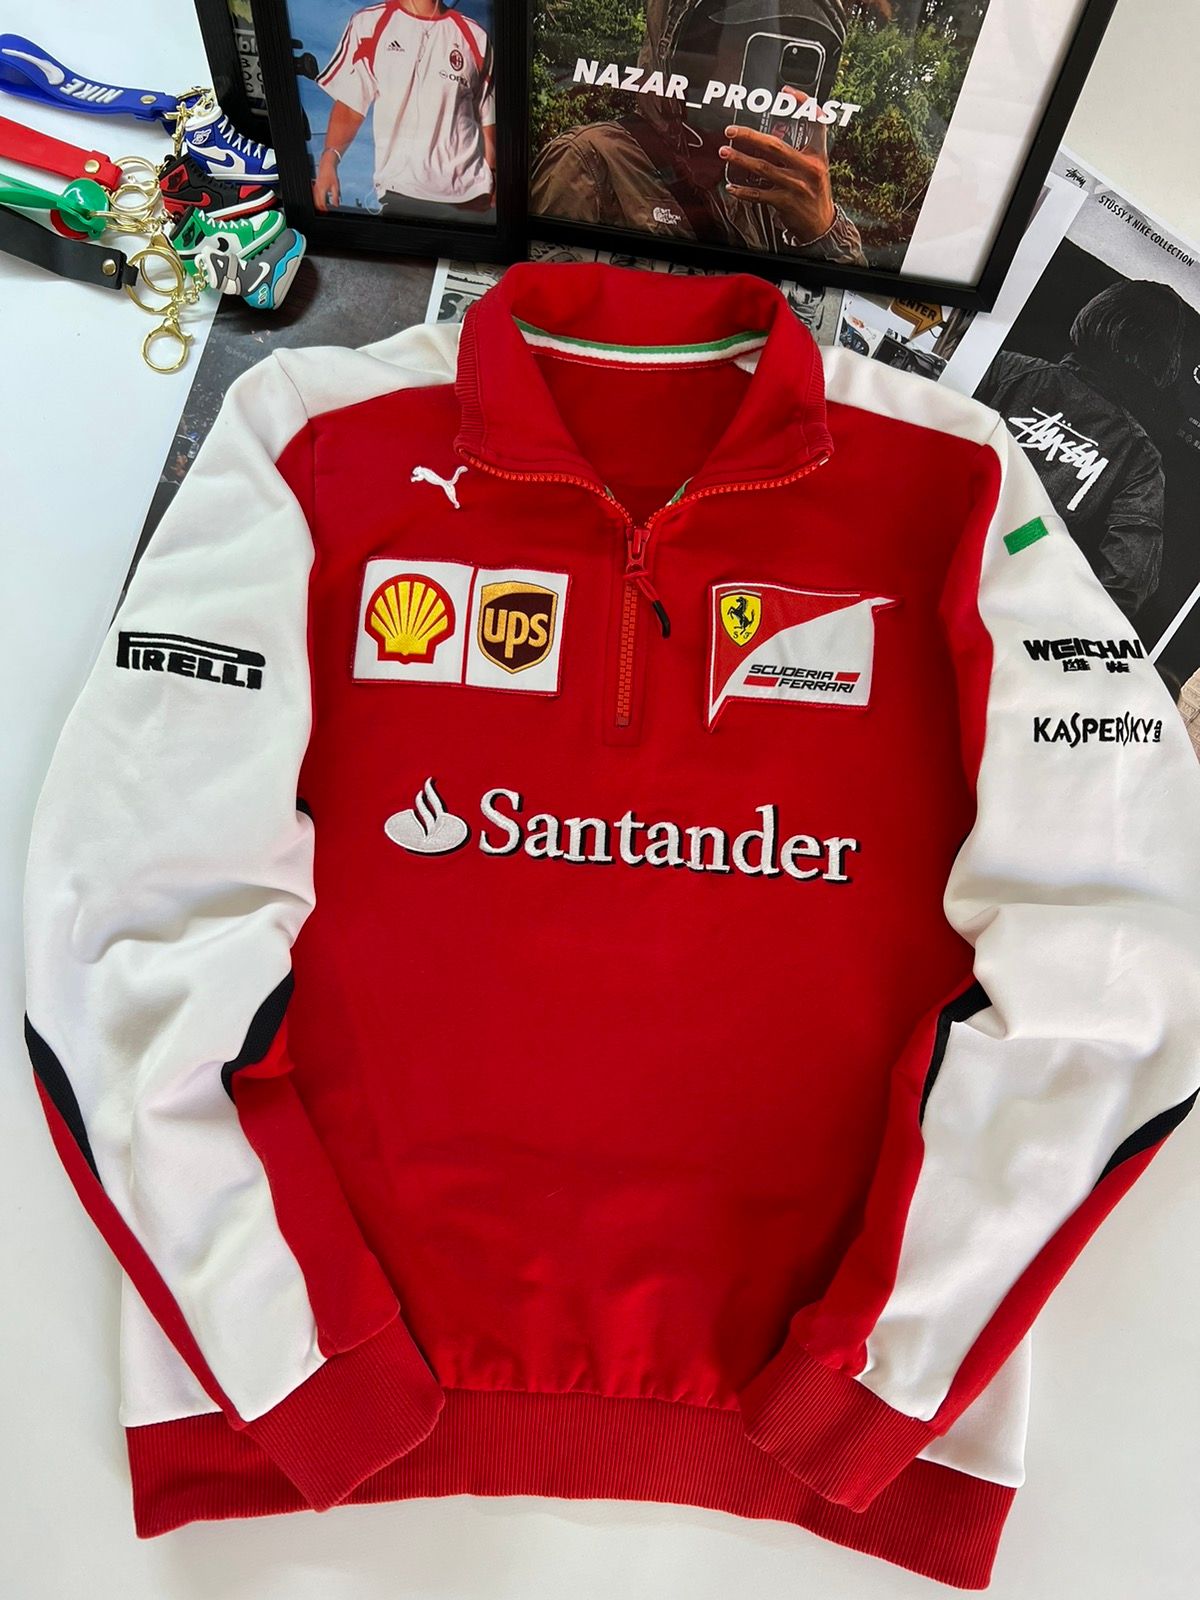 Puma Puma racing Sweatshirt Firelli Ferrari UPS Santander | Grailed